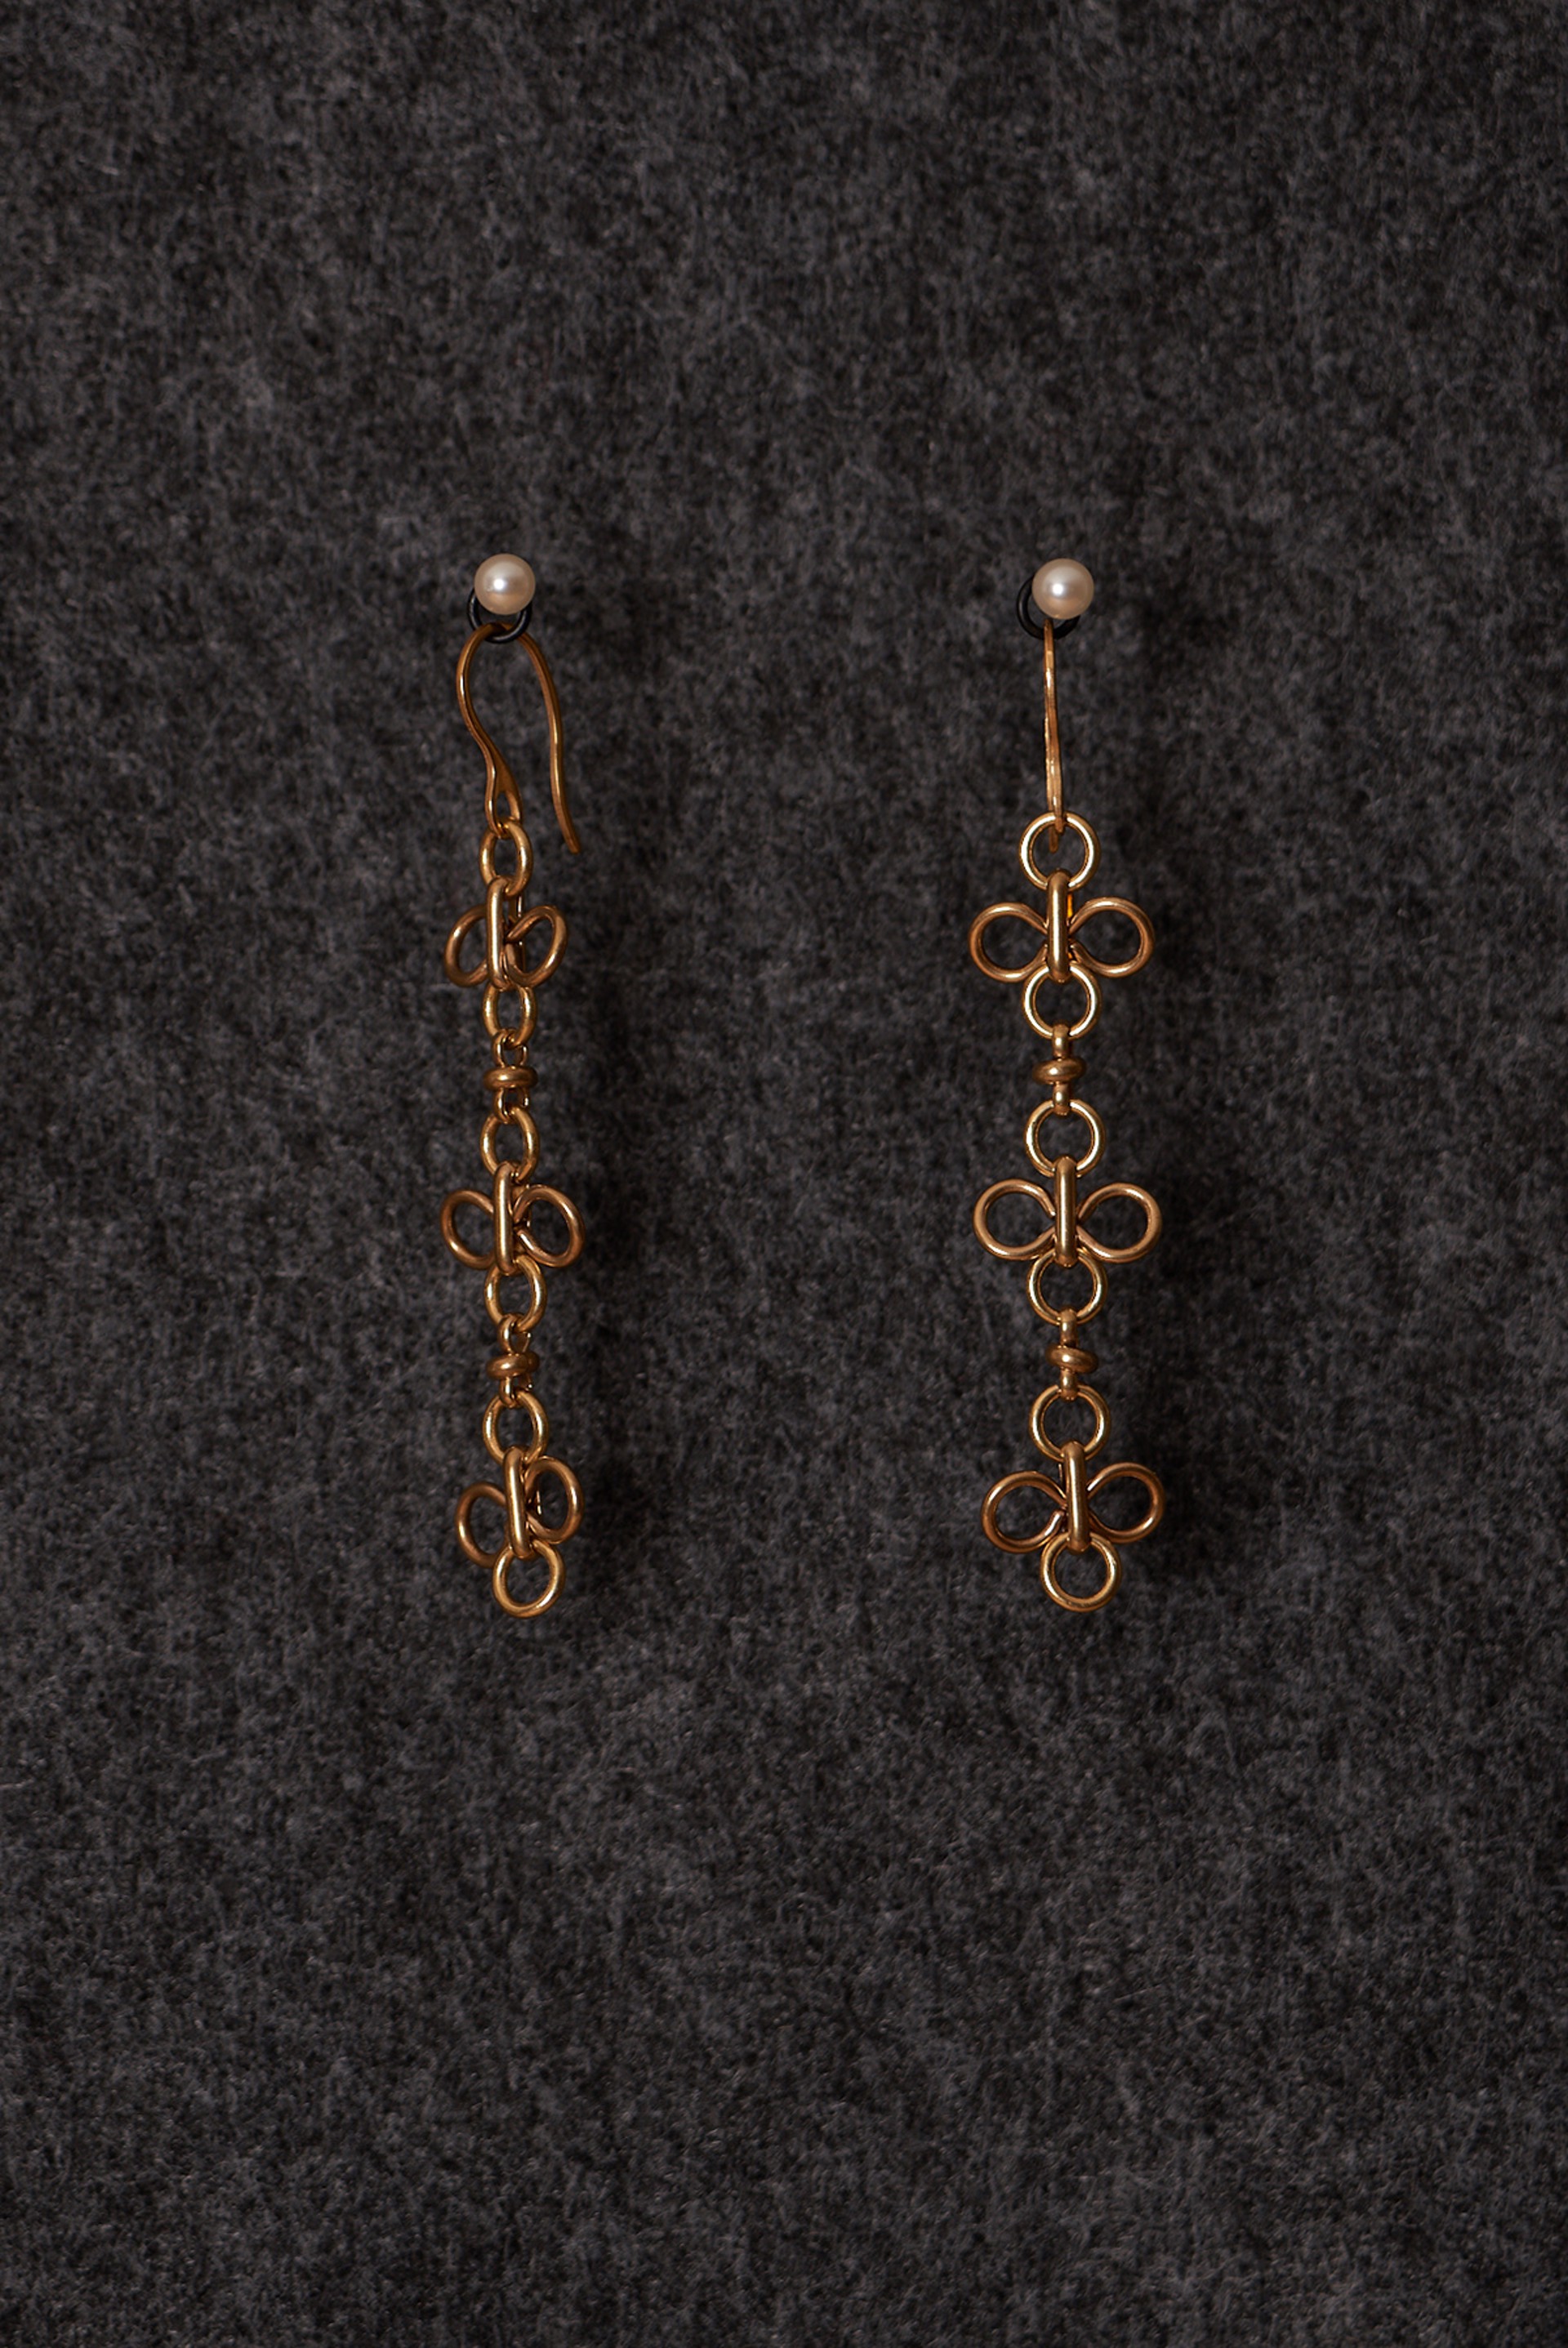 Brass Cloverlace Earrings by Cameron Johnson